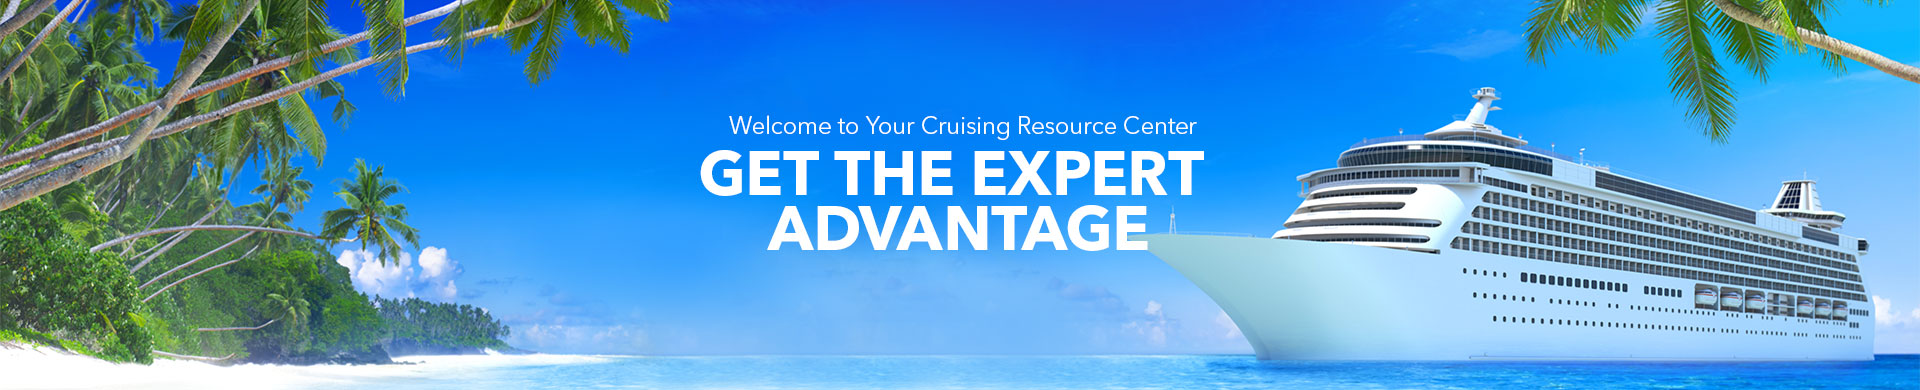 Cruise Resource Center